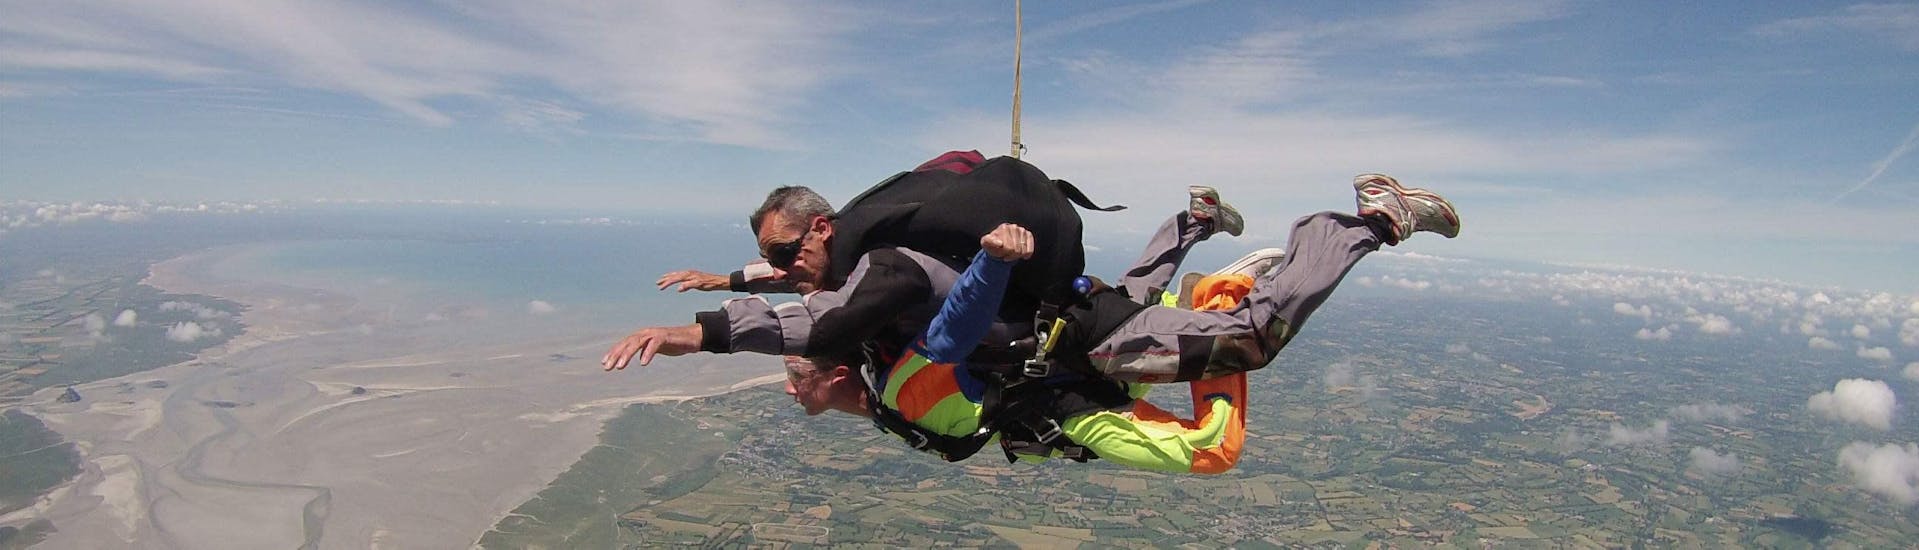 Tandem Skydive above Mont Saint-Michel from 3000m with Abeille Parachutisme Normandie - Hero image